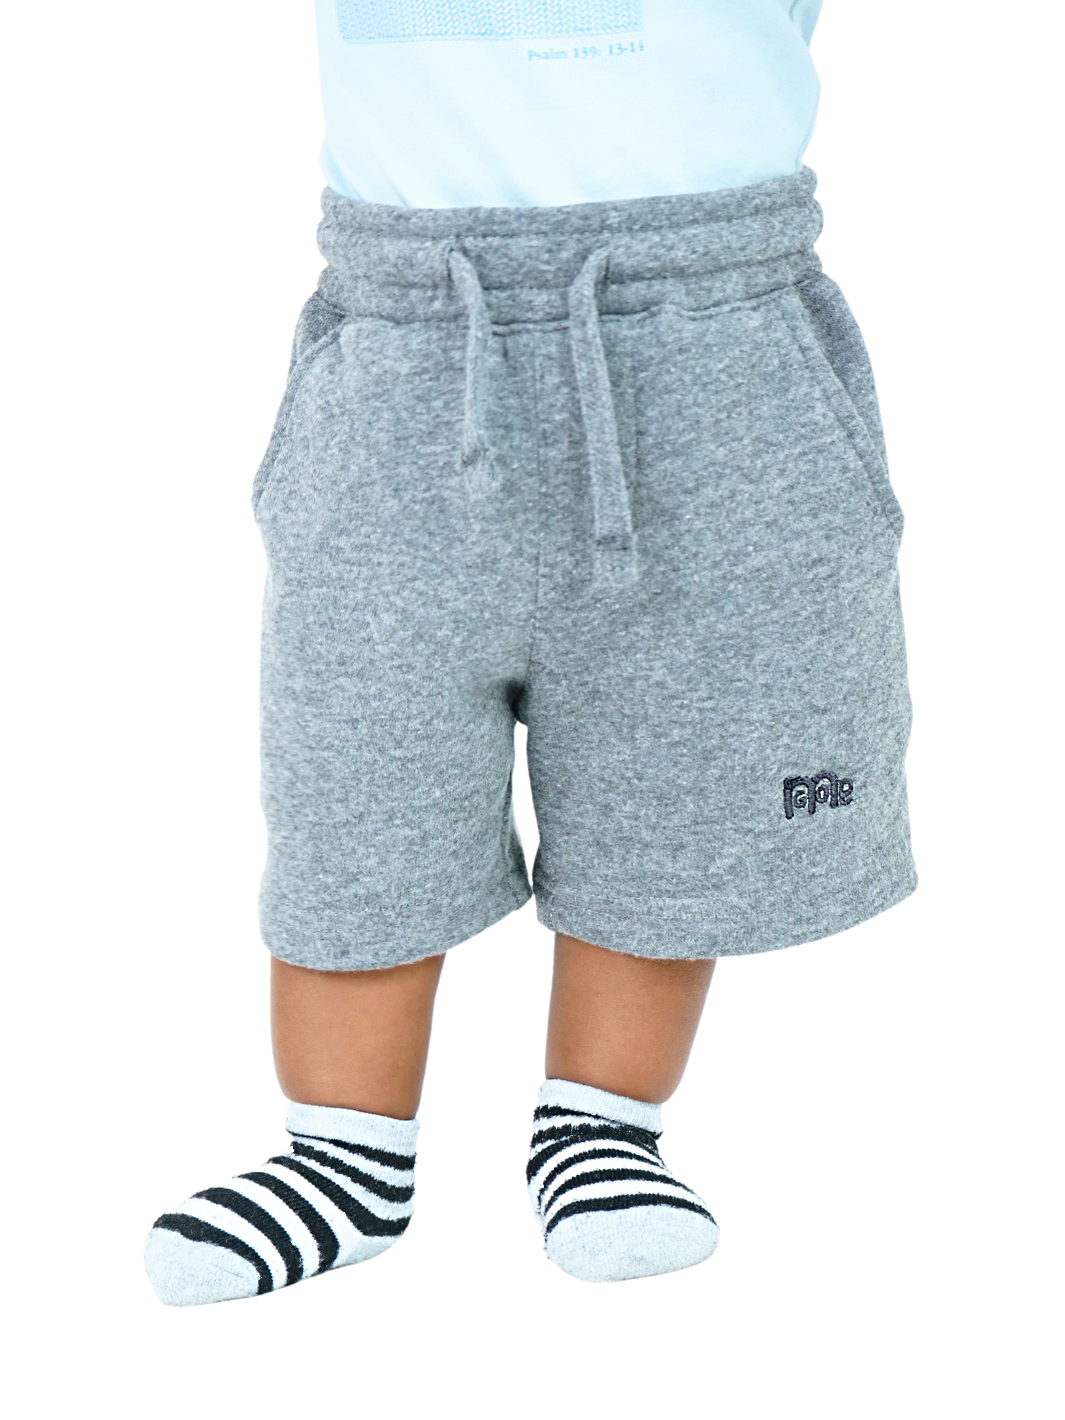 Toddler size Grey Shorts with elastic waistband, sewn fly detail, jersey-lined front pockets, stylish back pocket, and Dark Grey GODinme logo.